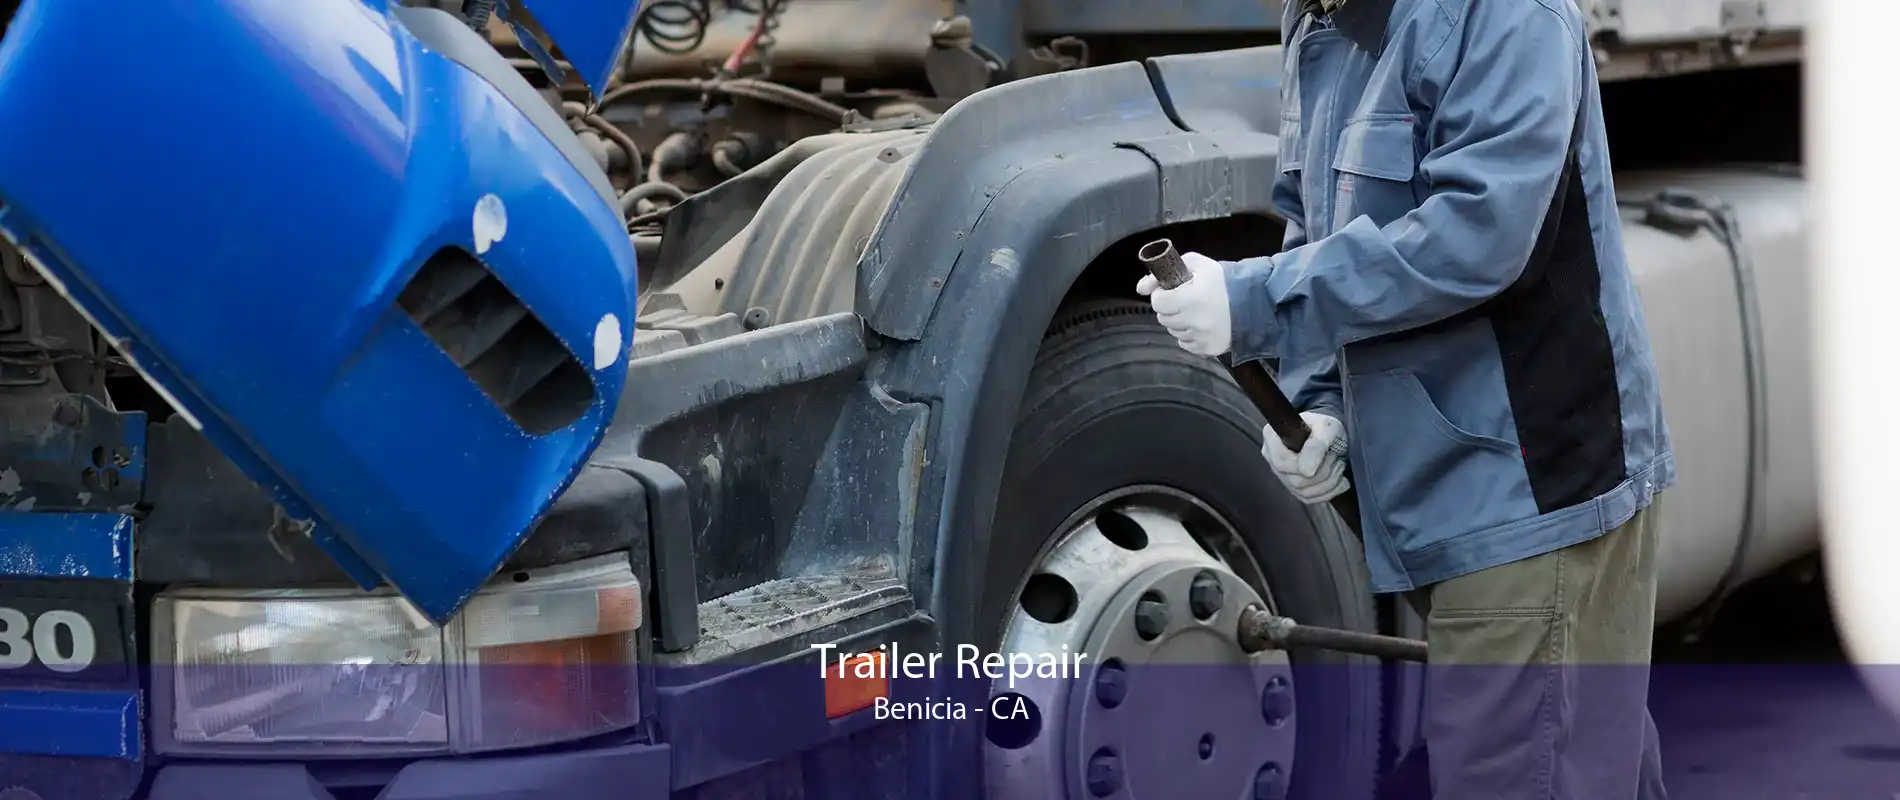 Trailer Repair Benicia - CA